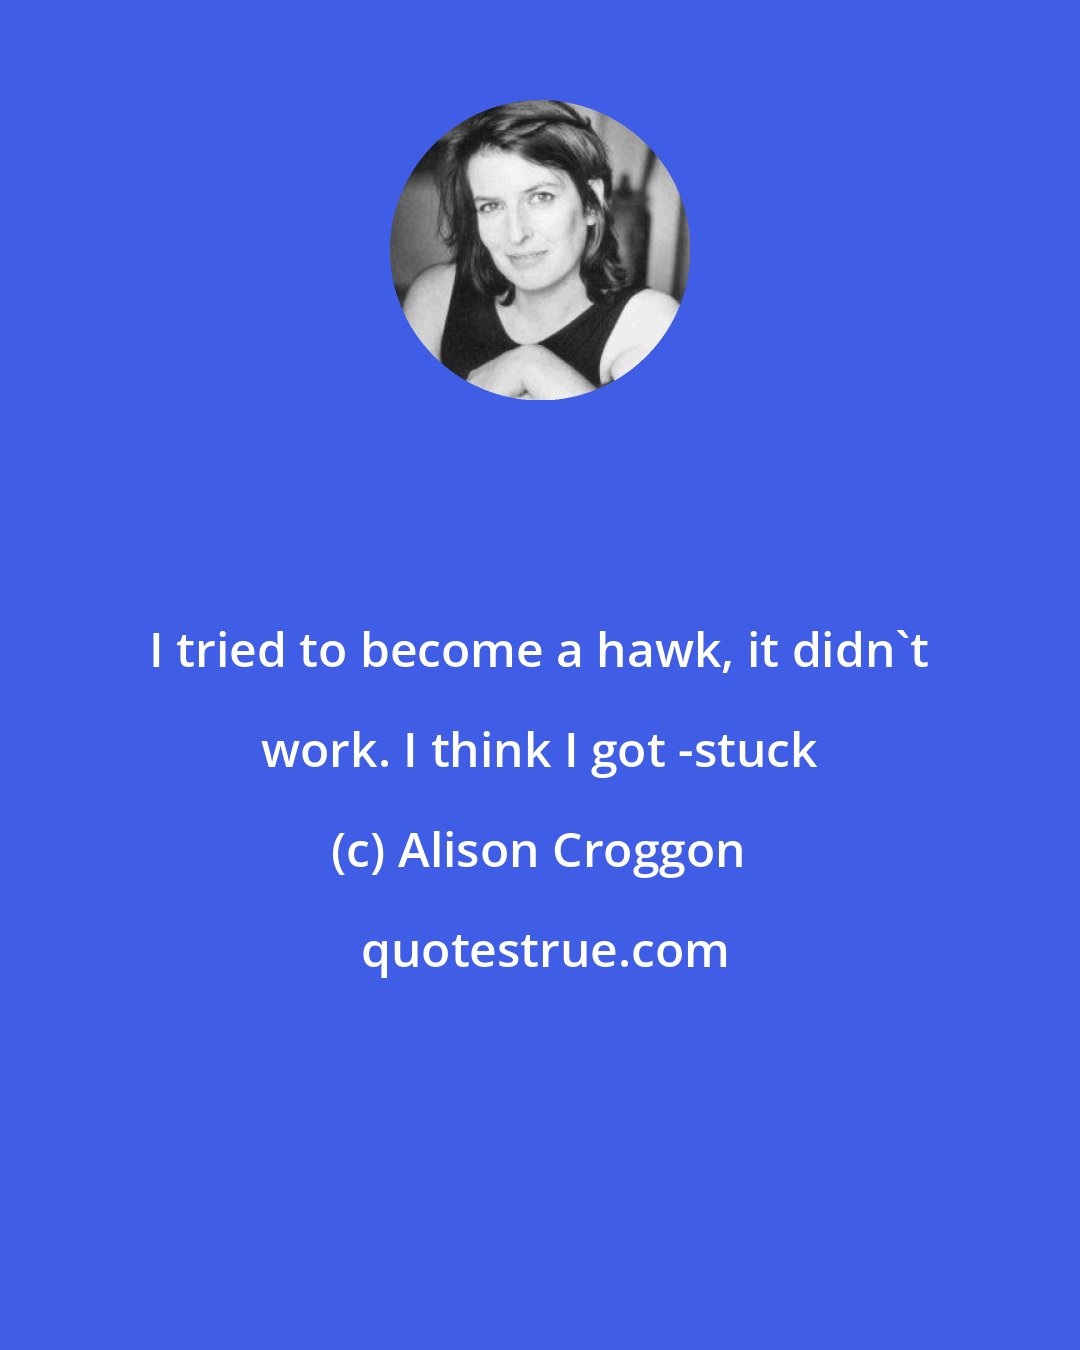 Alison Croggon: I tried to become a hawk, it didn't work. I think I got -stuck